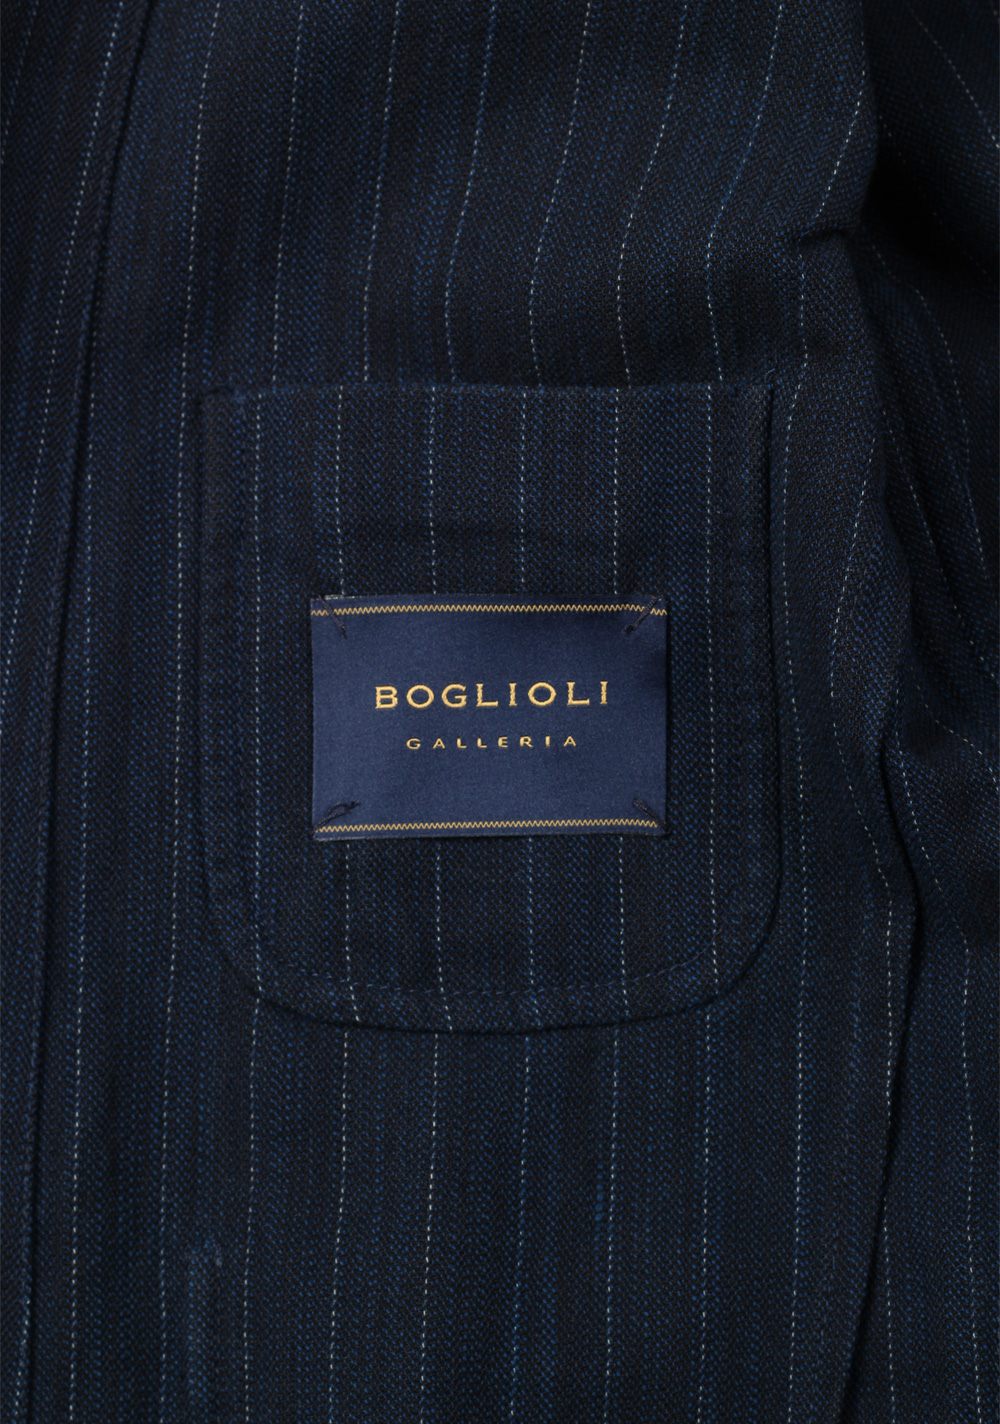 Boglioli Model Galleria 74 Blue Sport Coat Size 48 / 38R U.S. | Costume Limité